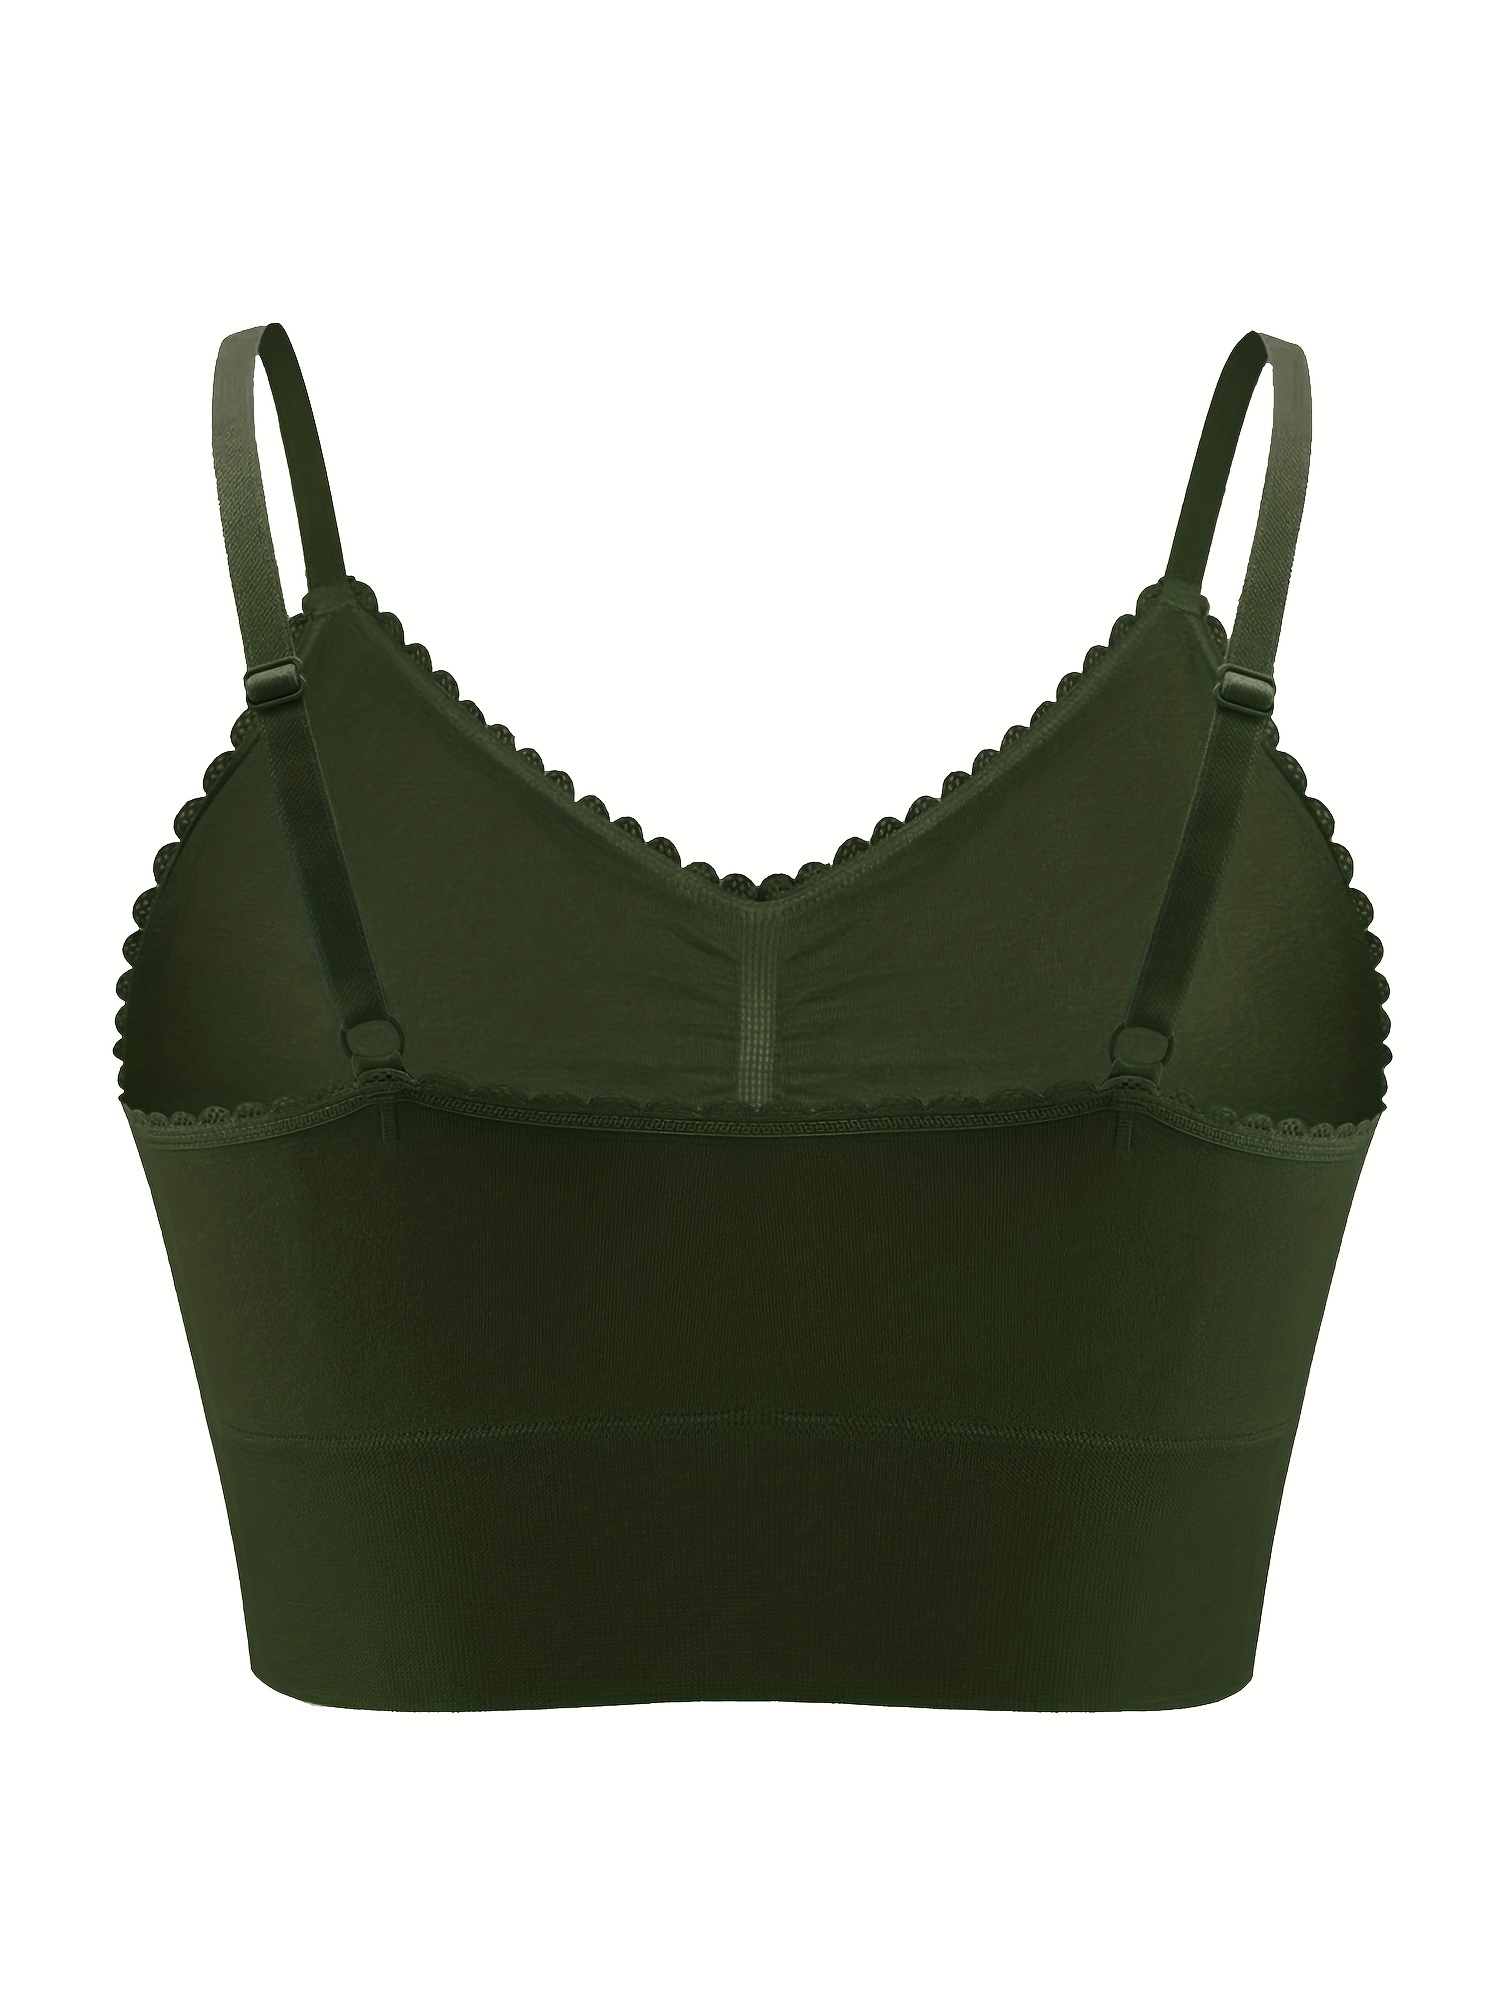 Plus Size Vest Bras for Fat Women Large Breast Lace Minimizer Bra Ladies  Wireless Full Cup Bra Bralette (Color : Green, Size : 100/44E)